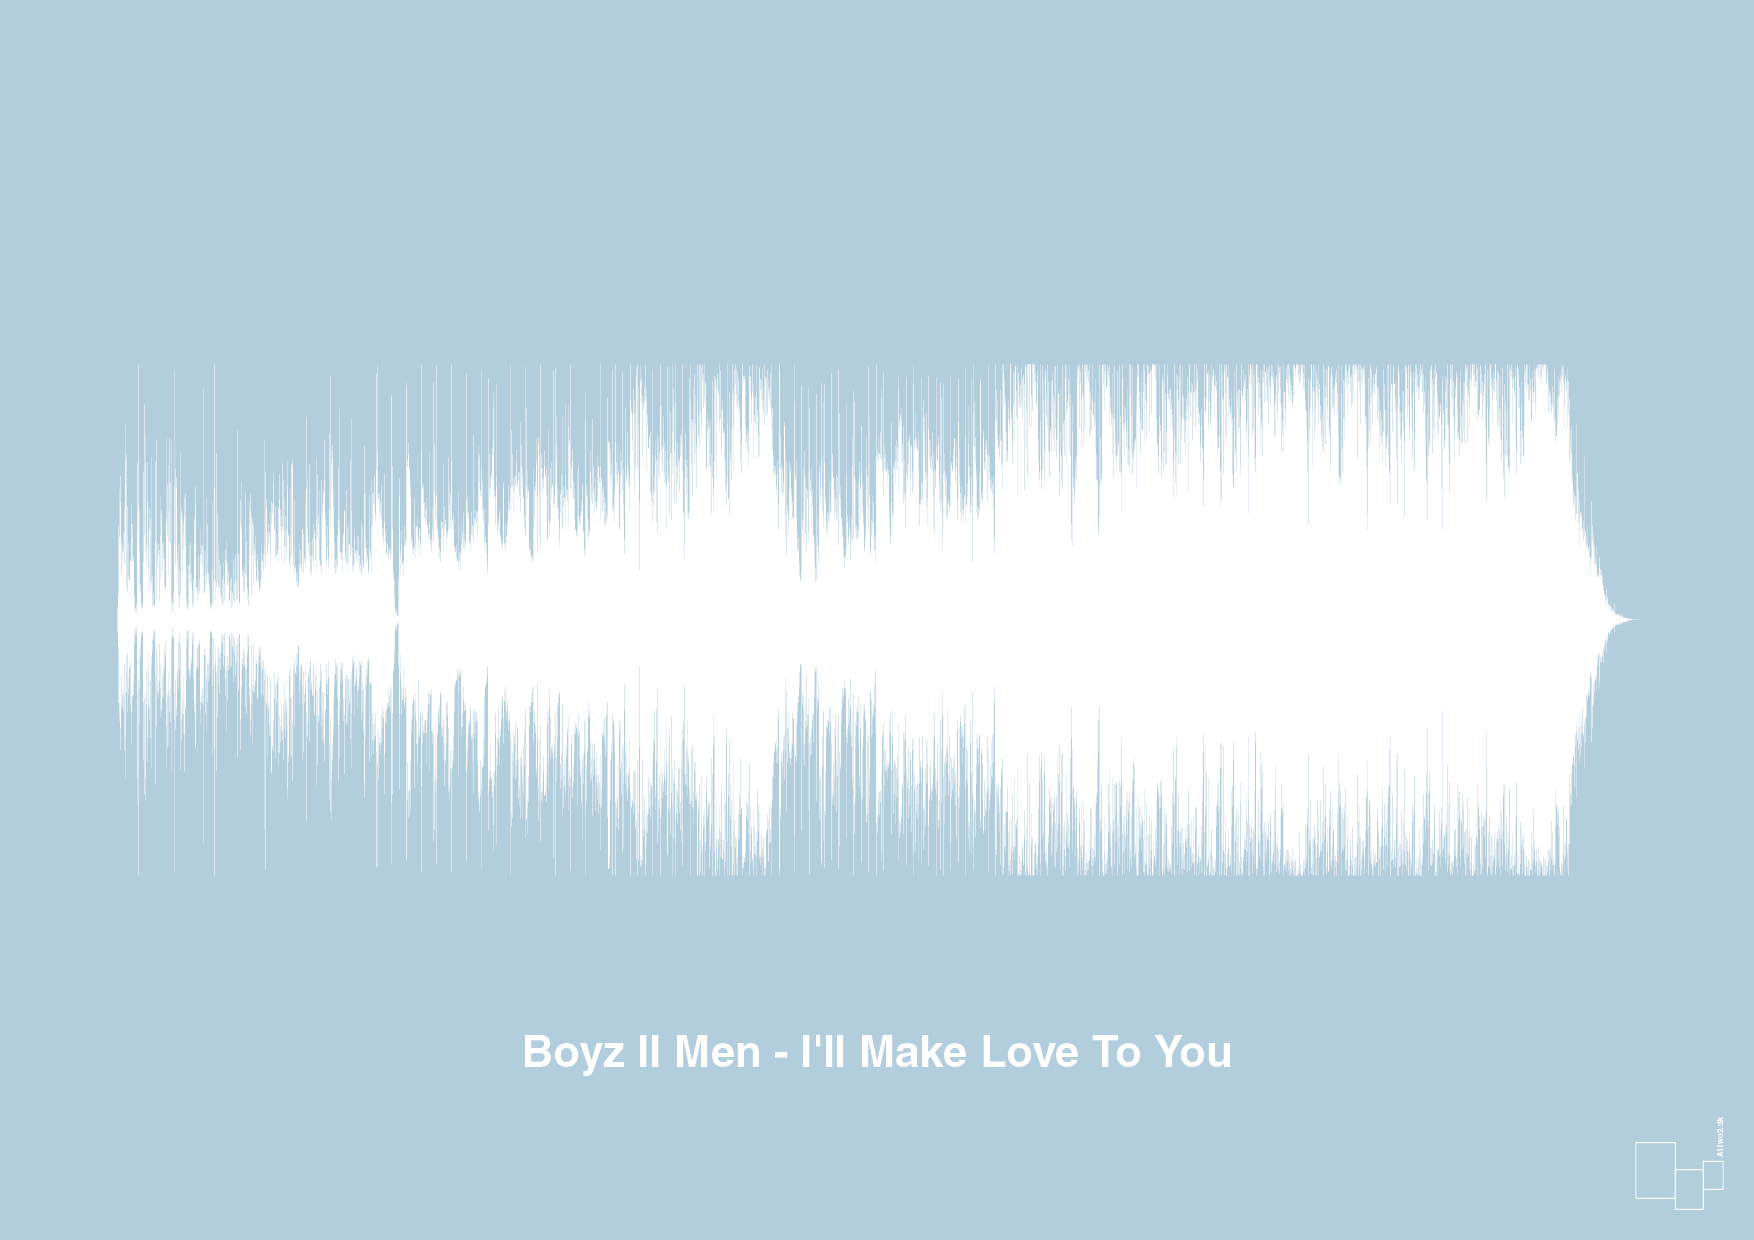 boyz II men - i'll make love to you - Plakat med Musik i Heavenly Blue